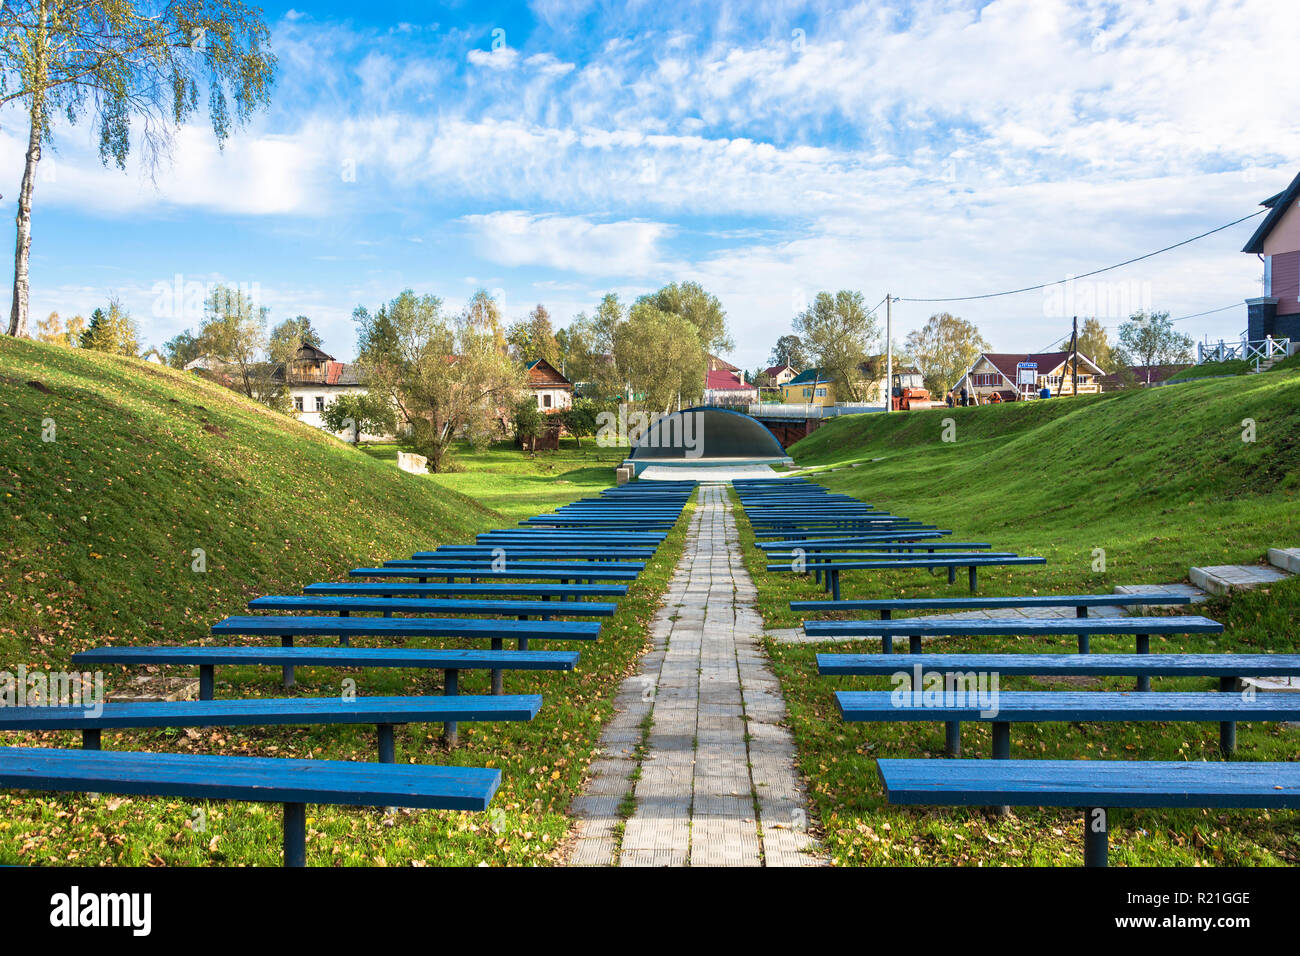 Vyatkoye Village, Yaroslavl Region, Russia - 10/02/2018: Pop platform with two rows of blue benches on October 2, 2018, Vyatkoye Village, Yaroslavl Re Stock Photo